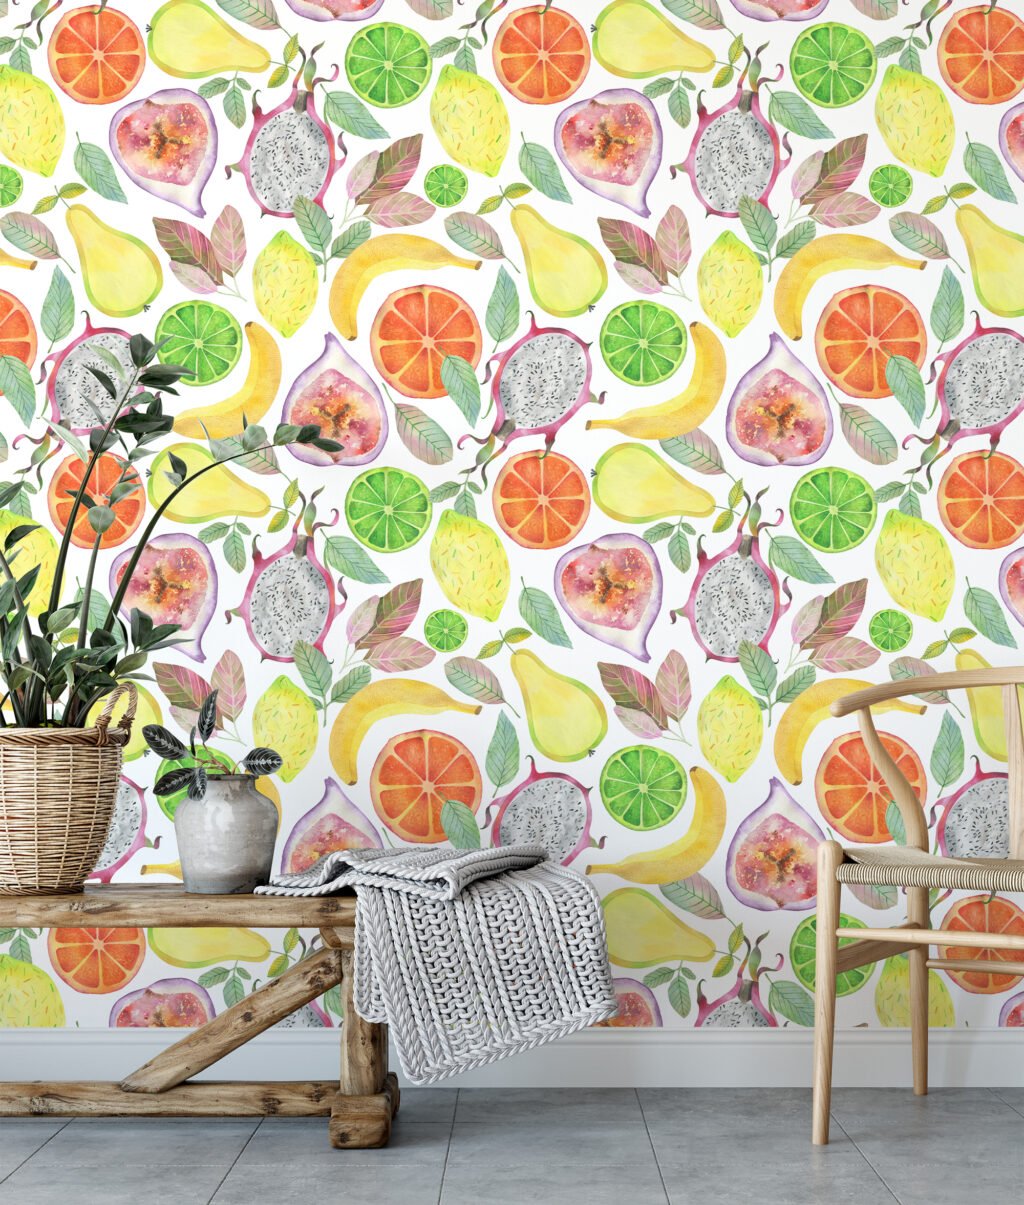 Watercolor Style Exotic Fruits Pattern Illustration Wallpaper, Juicy Delightful Fresh Fruit Peel & Stick Wall Mural